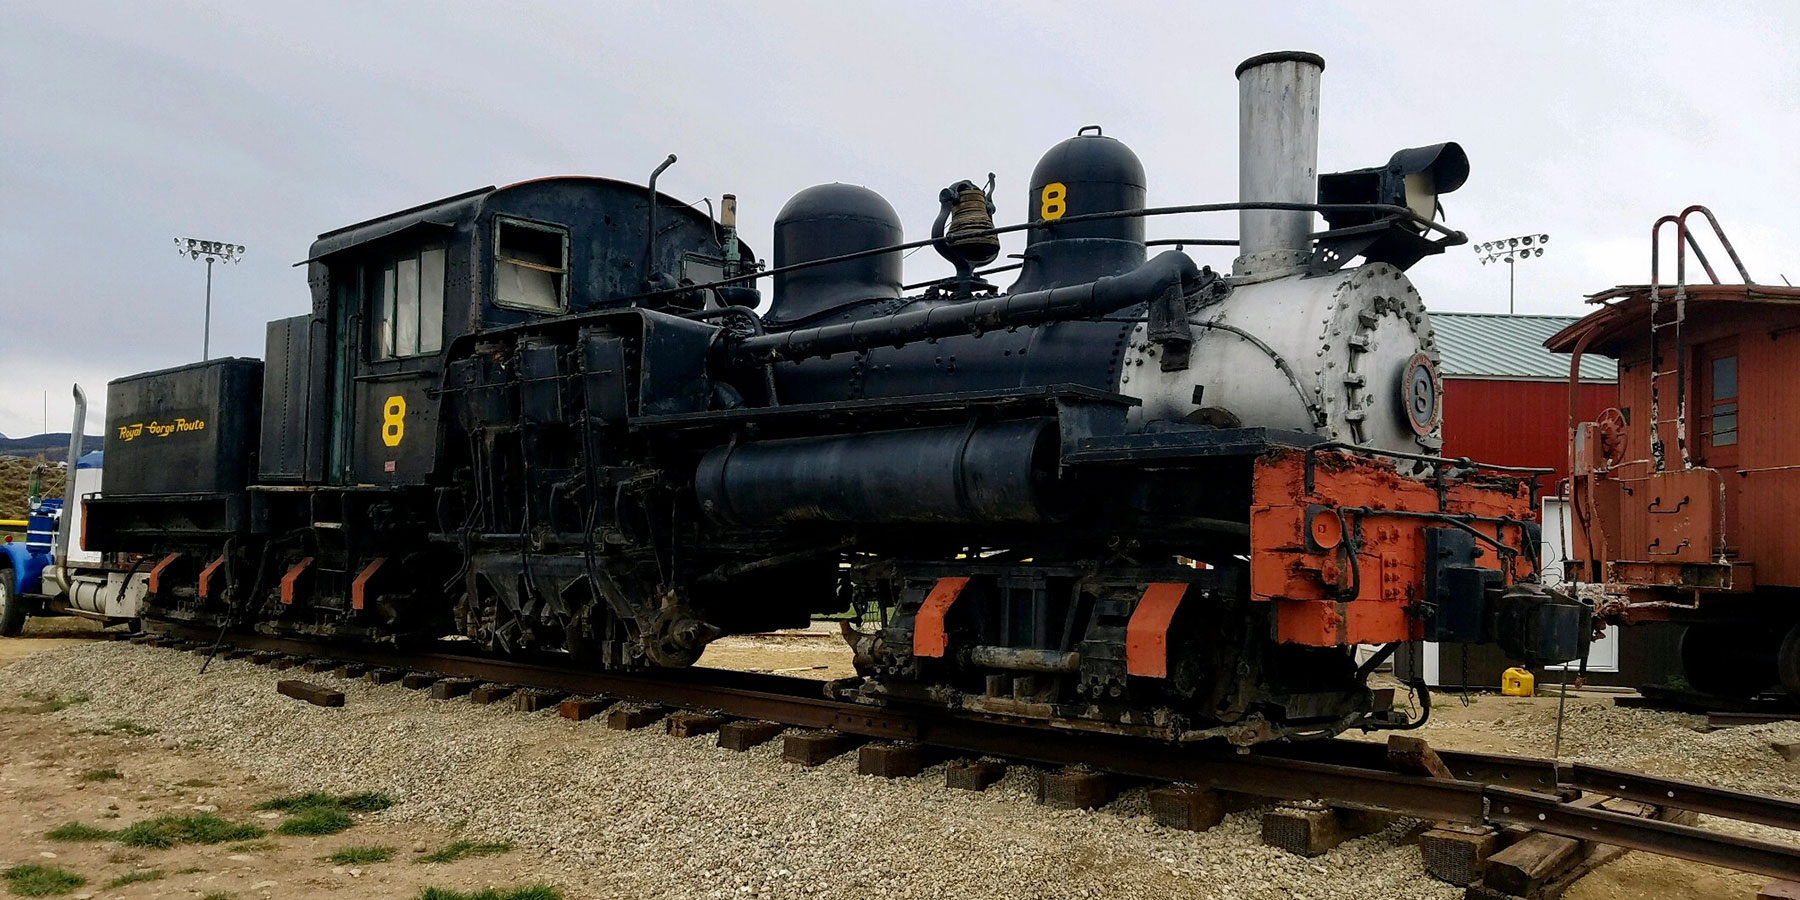 1922 Shay locomotive at Moffat Road Railroad Museum